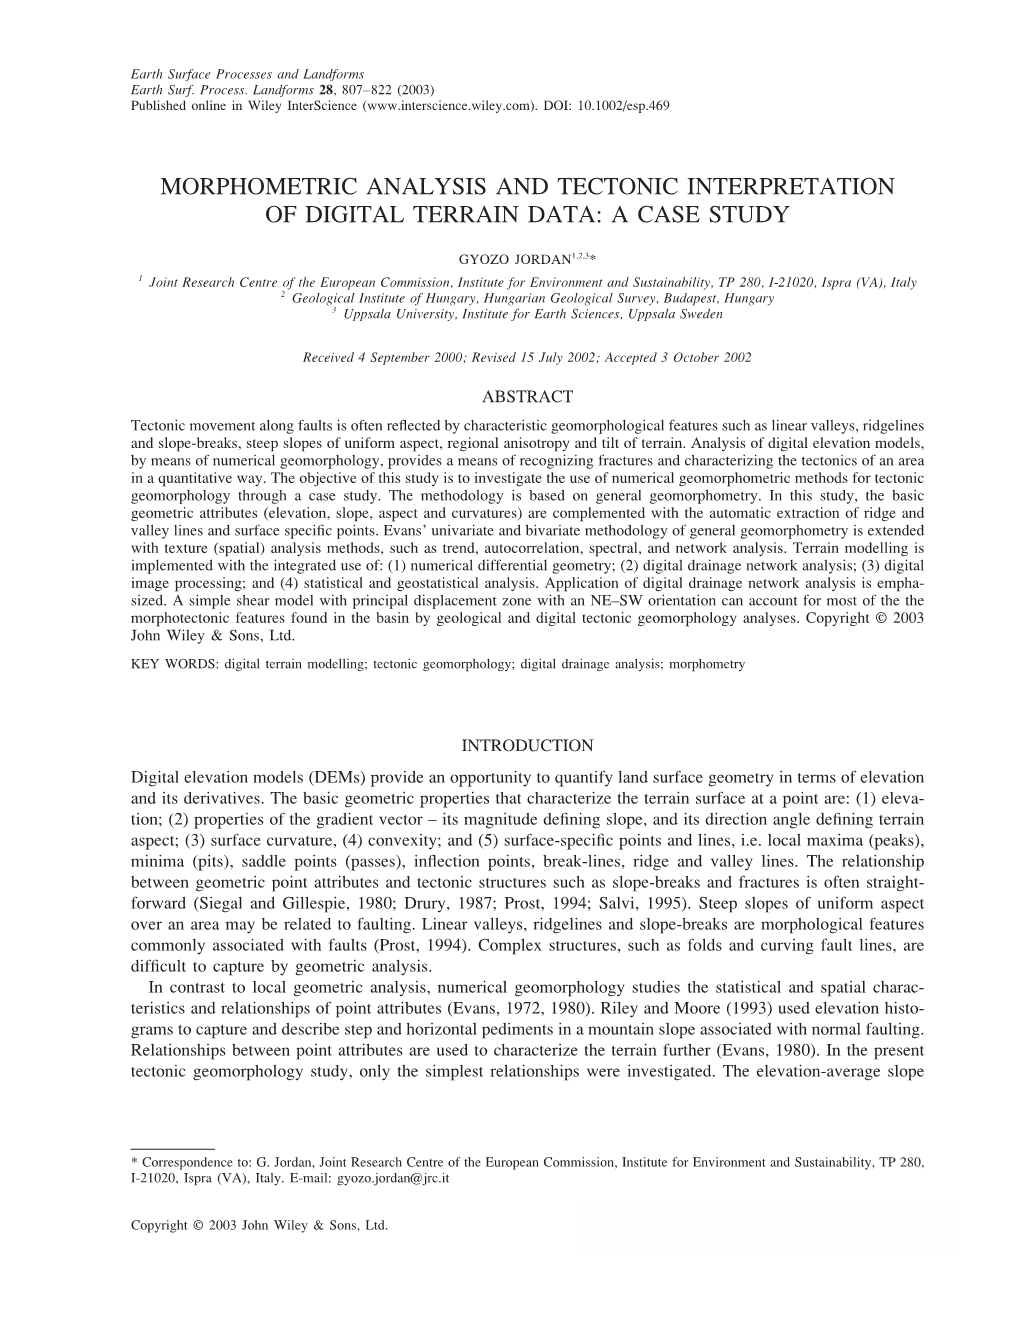 Morphometric Analysis and Tectonic Interpretation of Digital Terrain Data: a Case Study